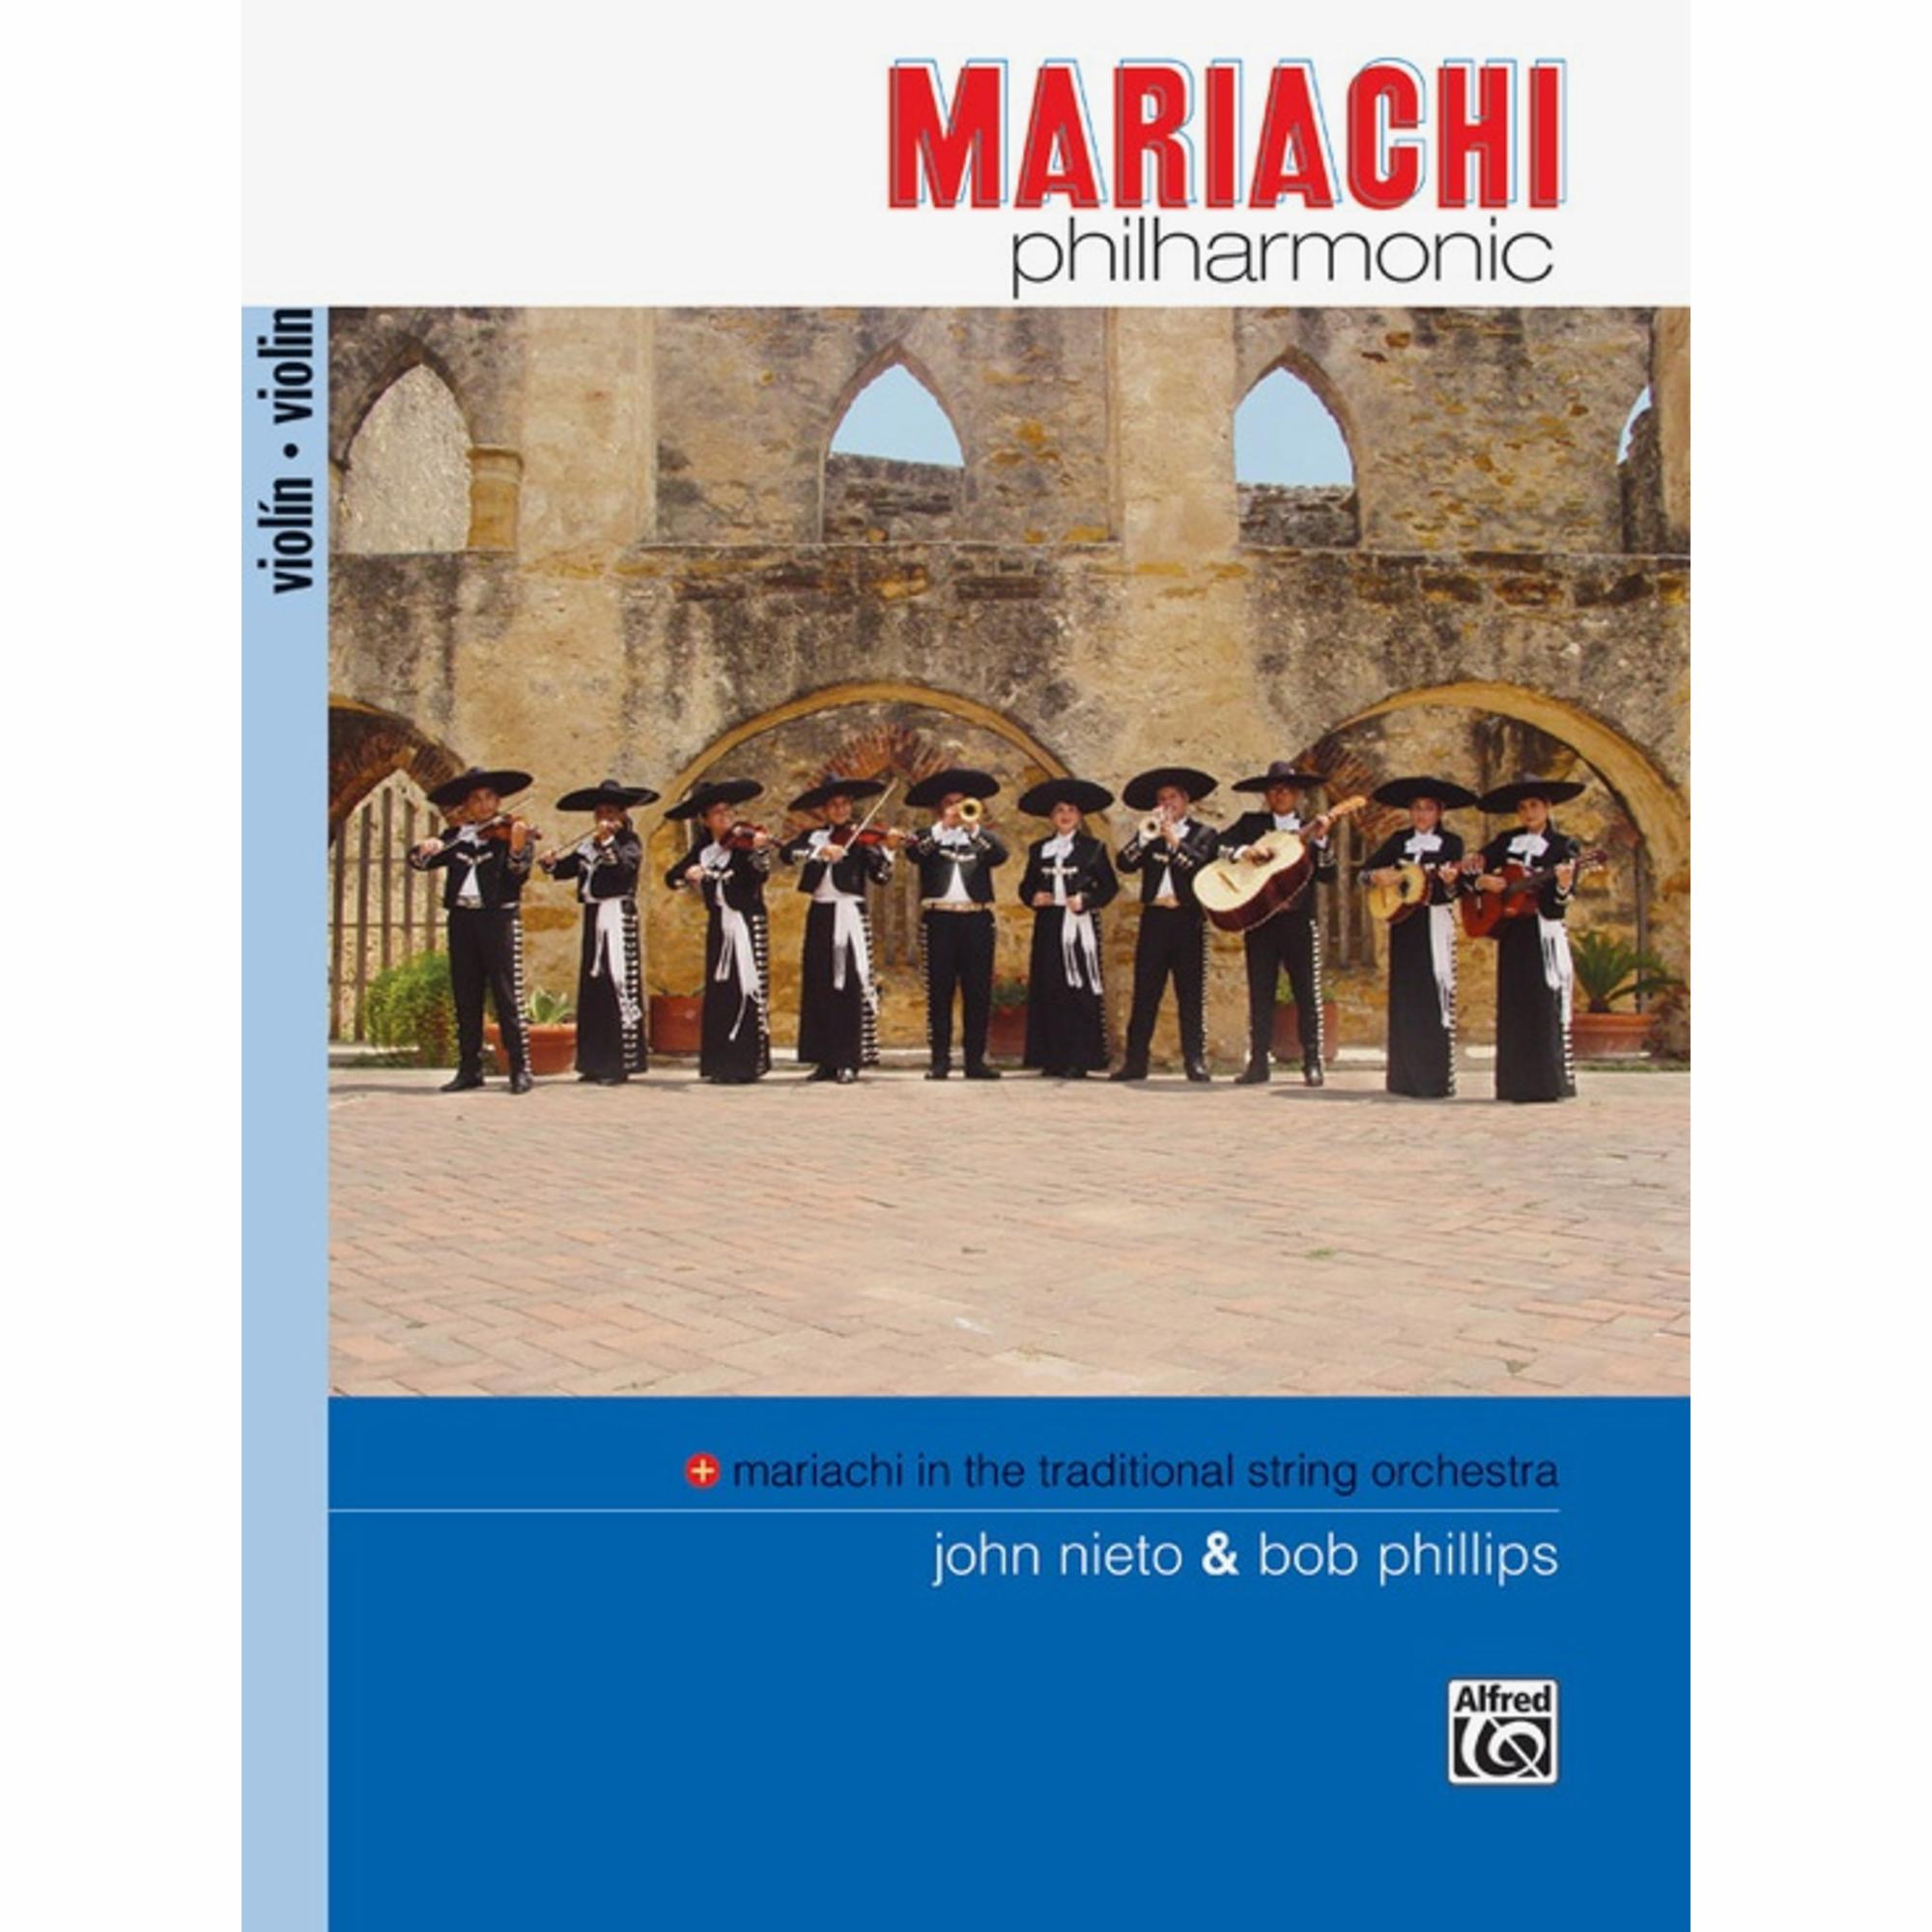 Mariachi Philharmonic for Strings 